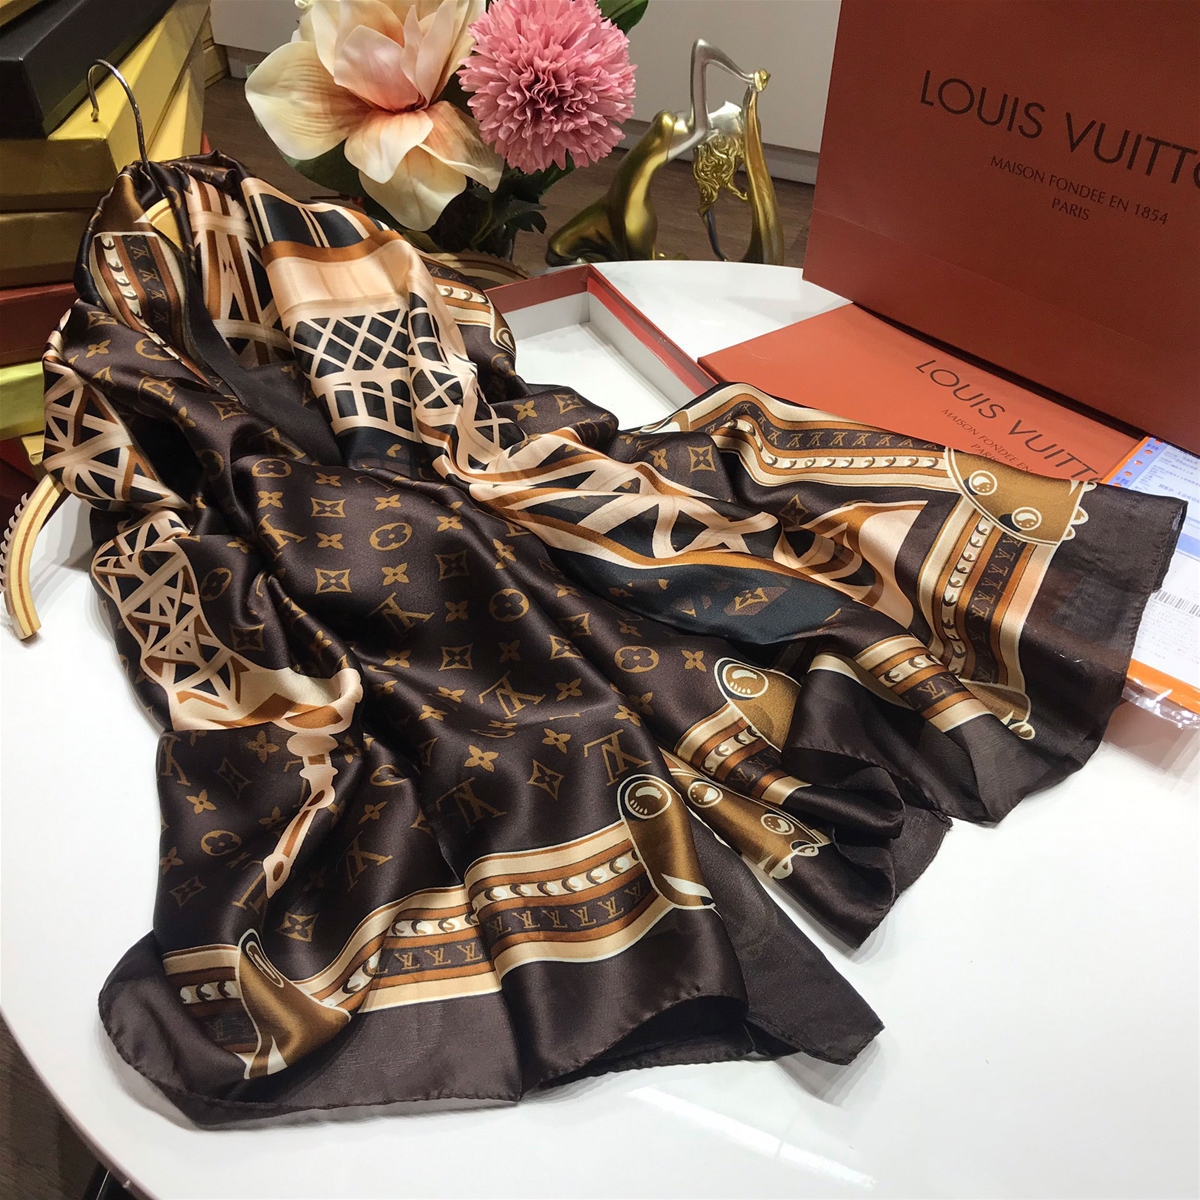 Khăn hiệu hoa nâu Louis Vuitton cao cấp